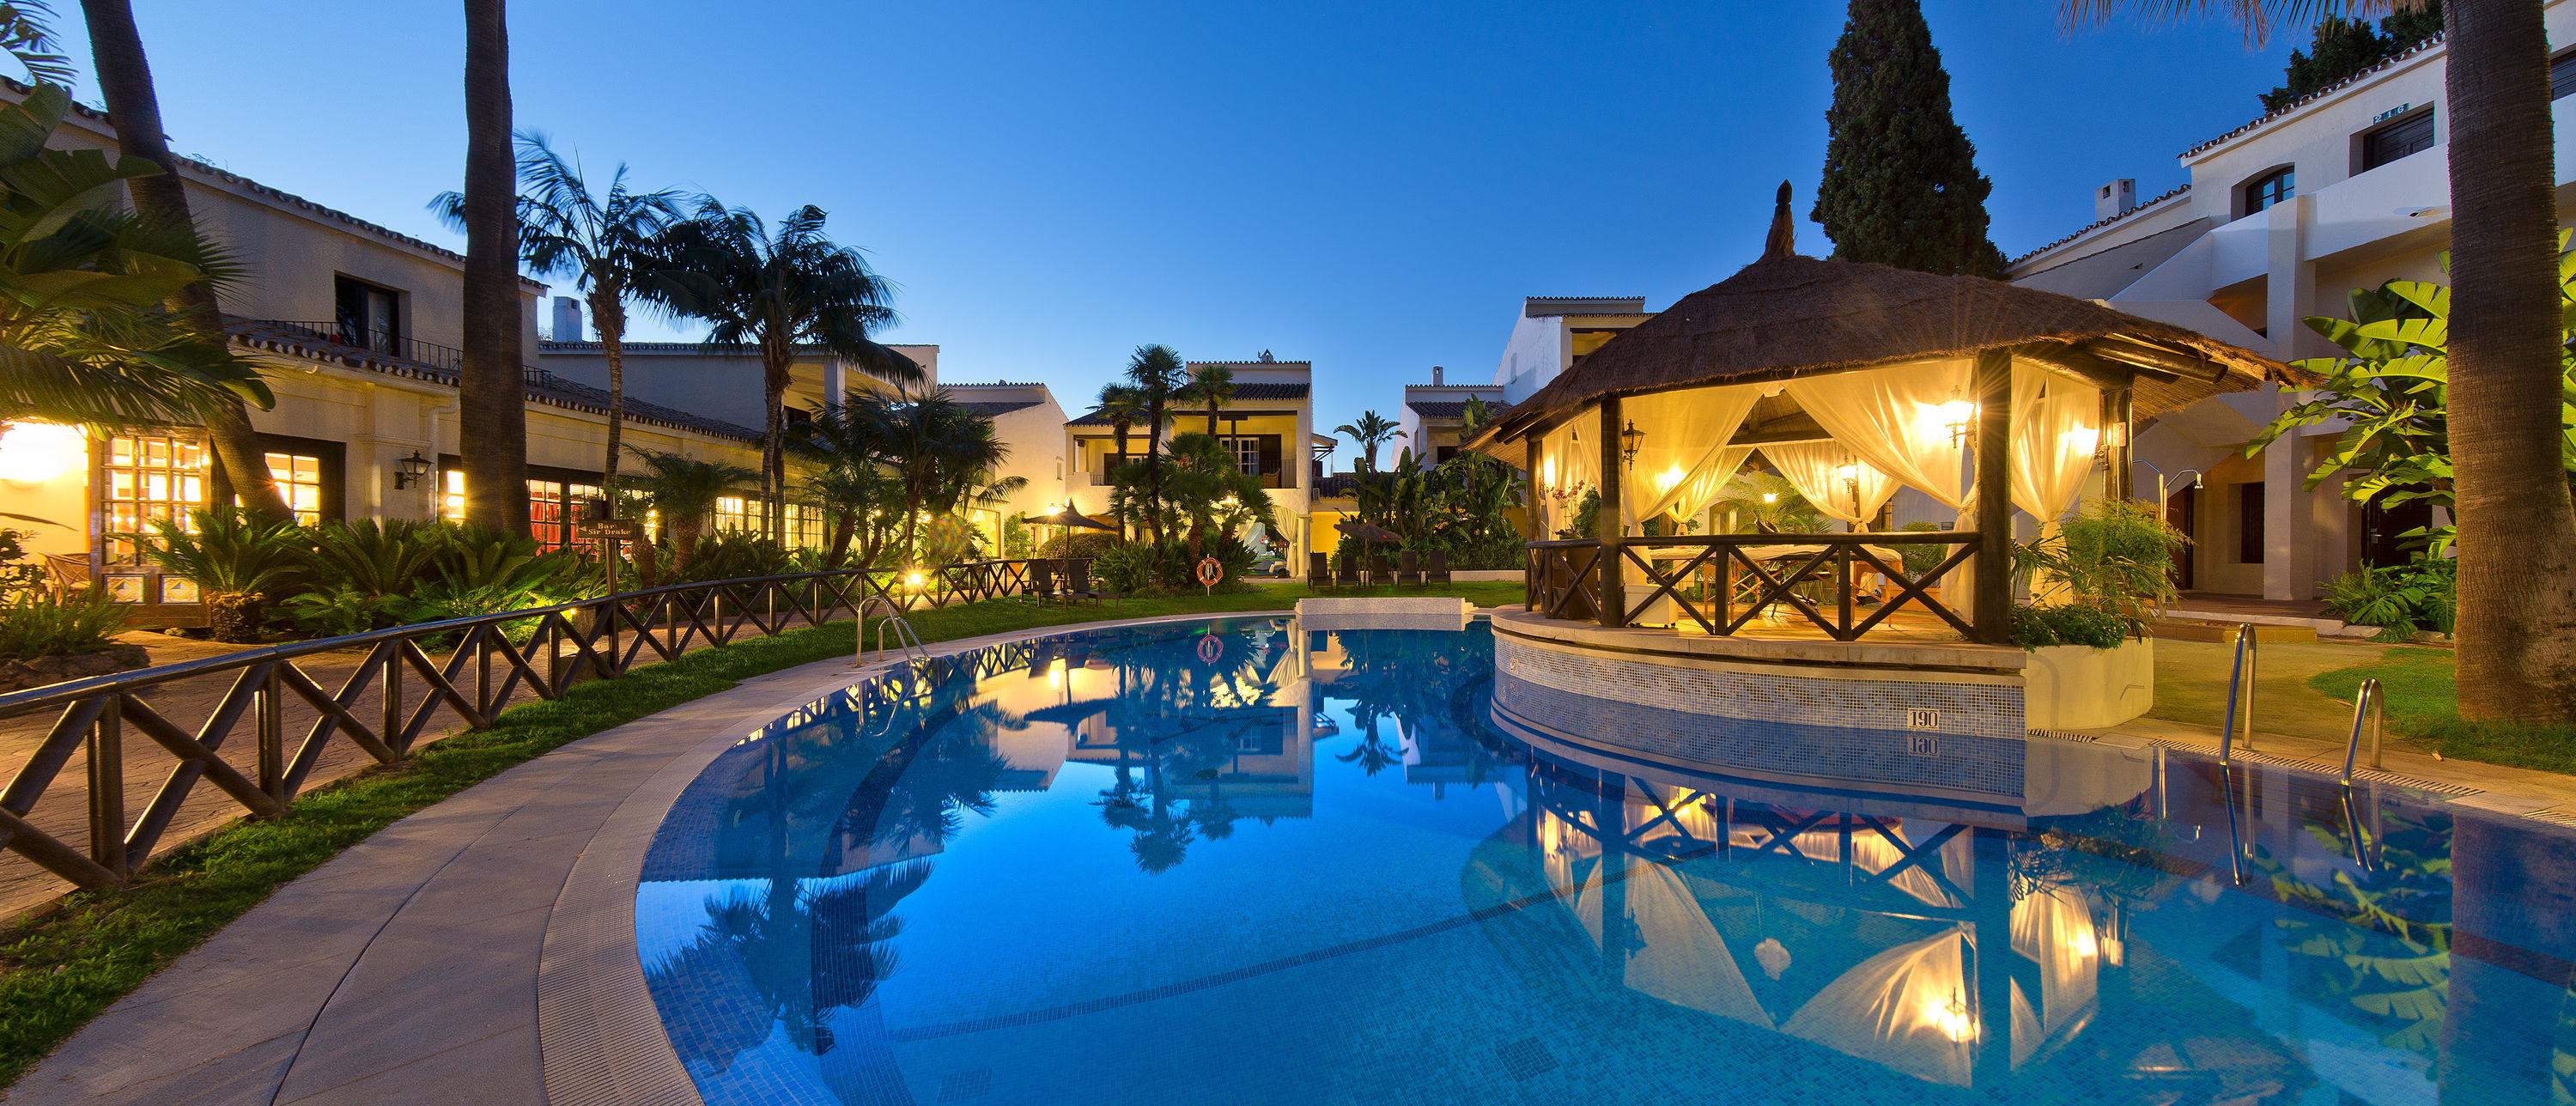 Melia Marbella Banus - Puerto Banus hotels